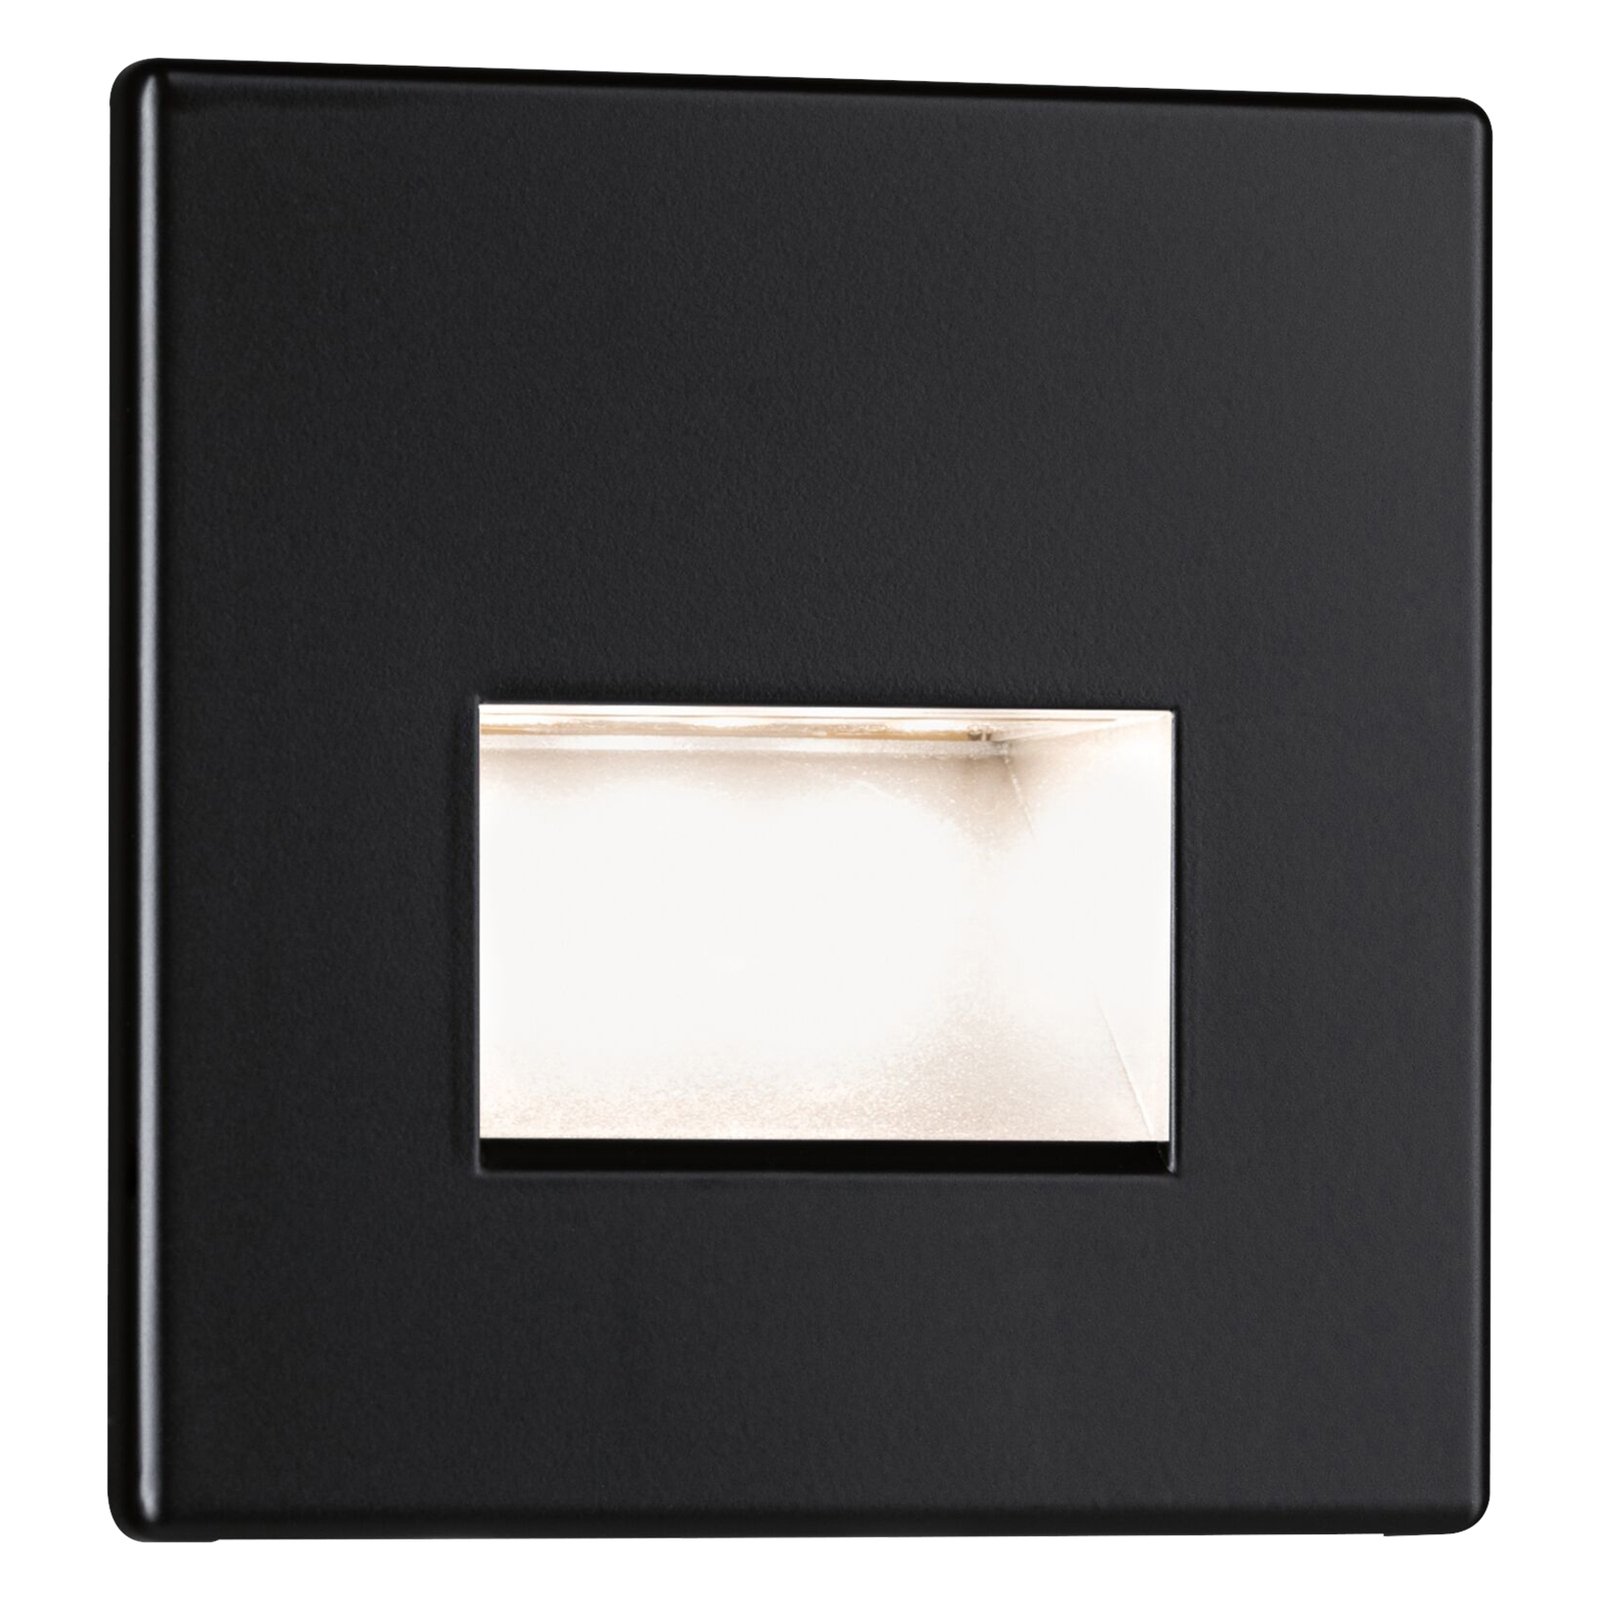 Paulmann Edge LED recessed wall light, black